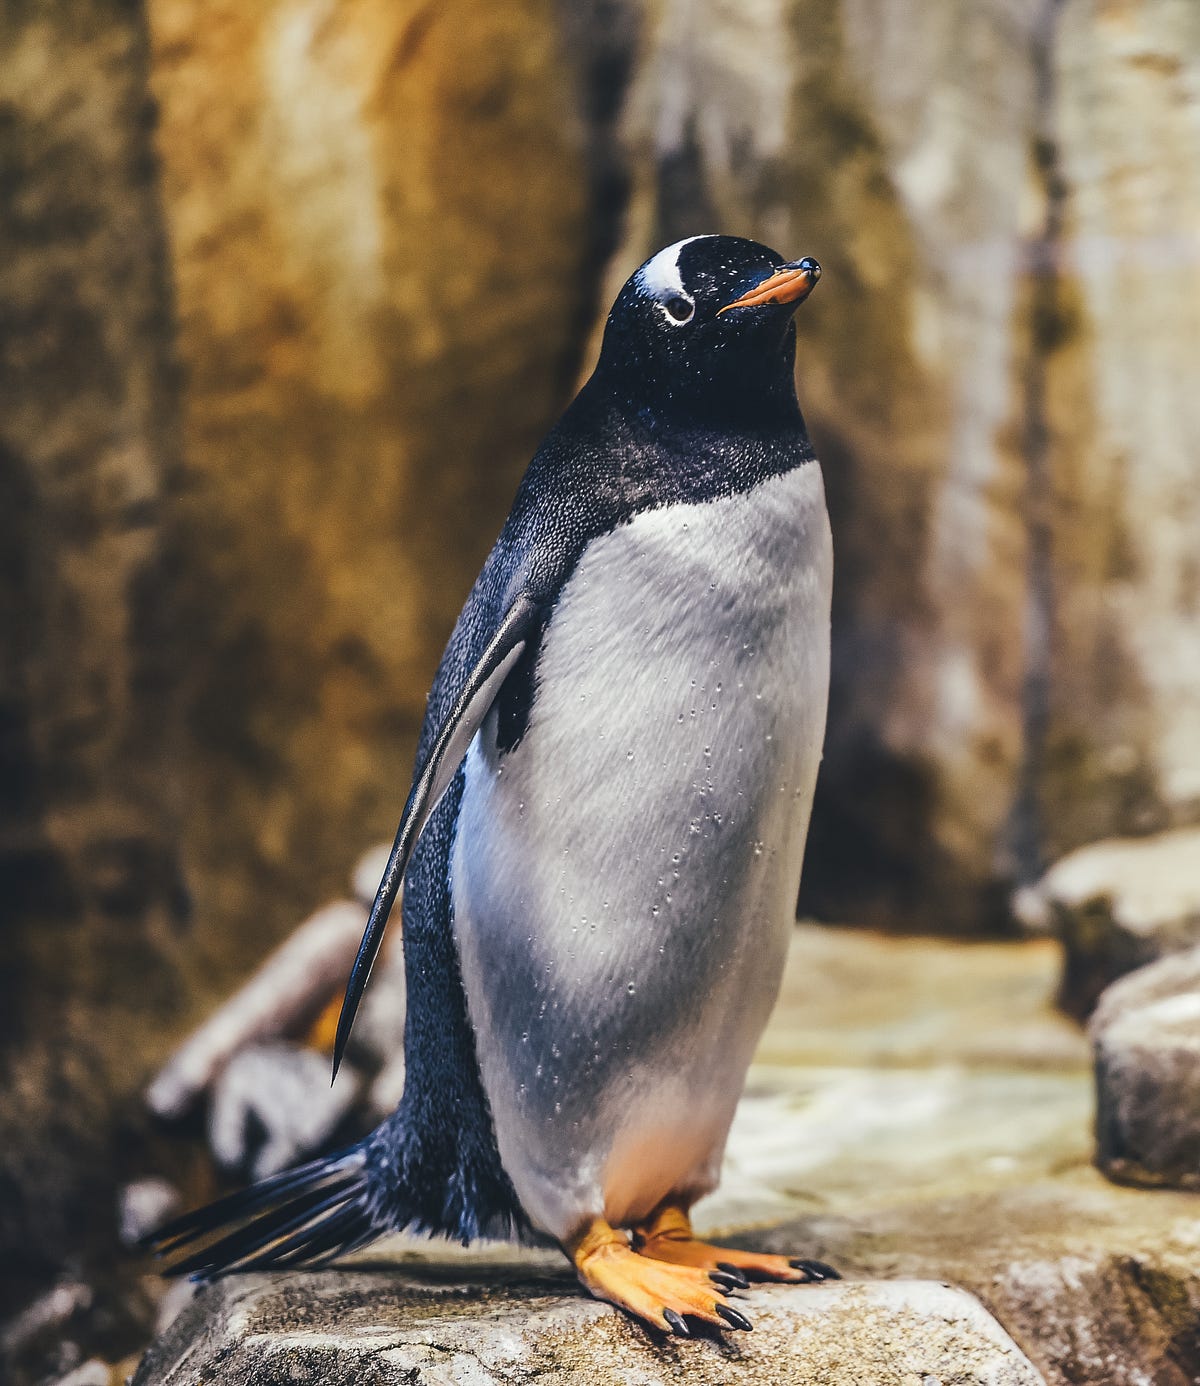 Little Blue Penguin Facts - CRITTERFACTS